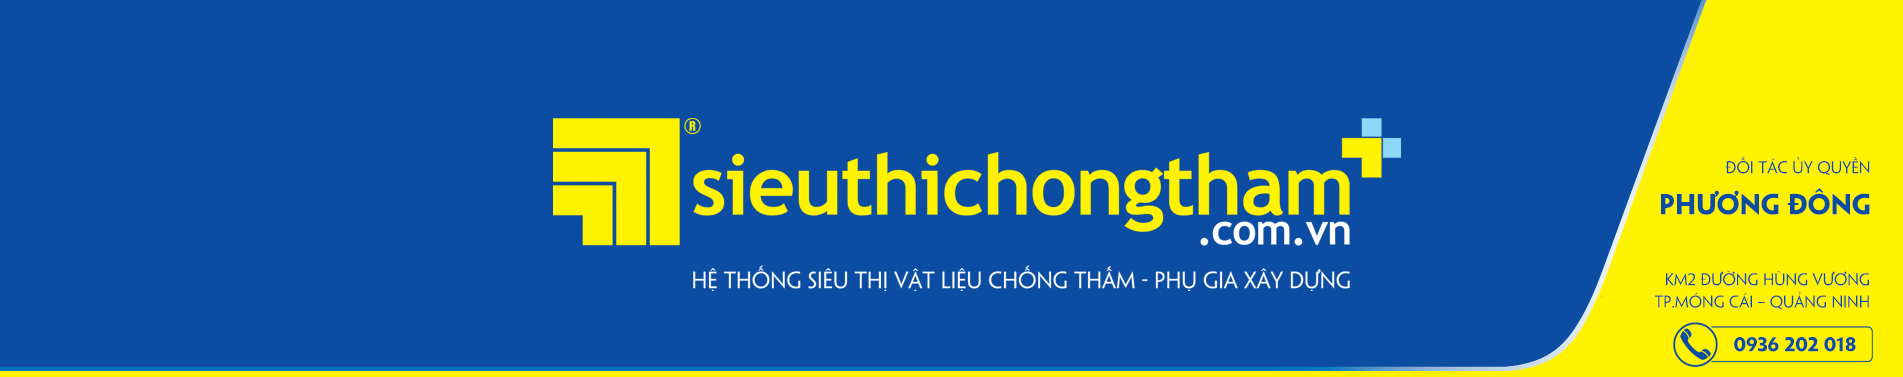 Phuong dong Banner